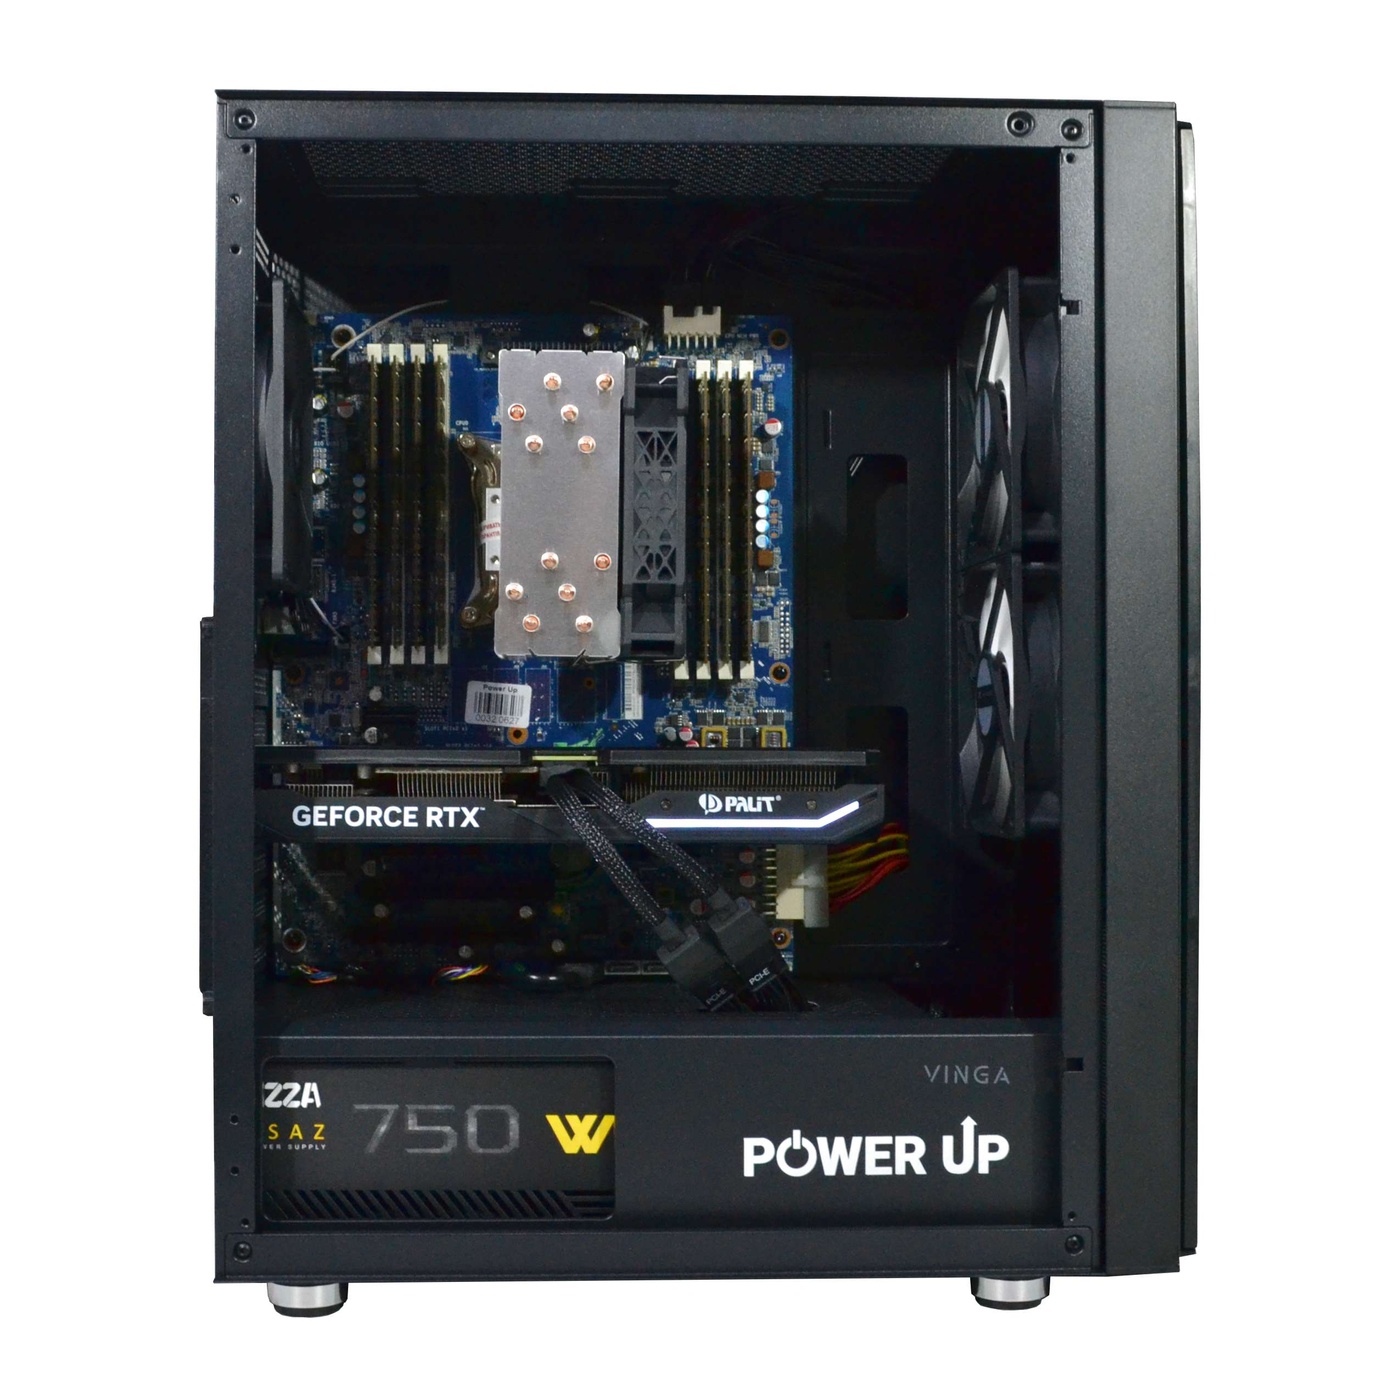 Робоча станція PowerUp #169 Xeon E5 2680 v4/64 GB/SSD 512GB/GeForce RTX 3060 12GB